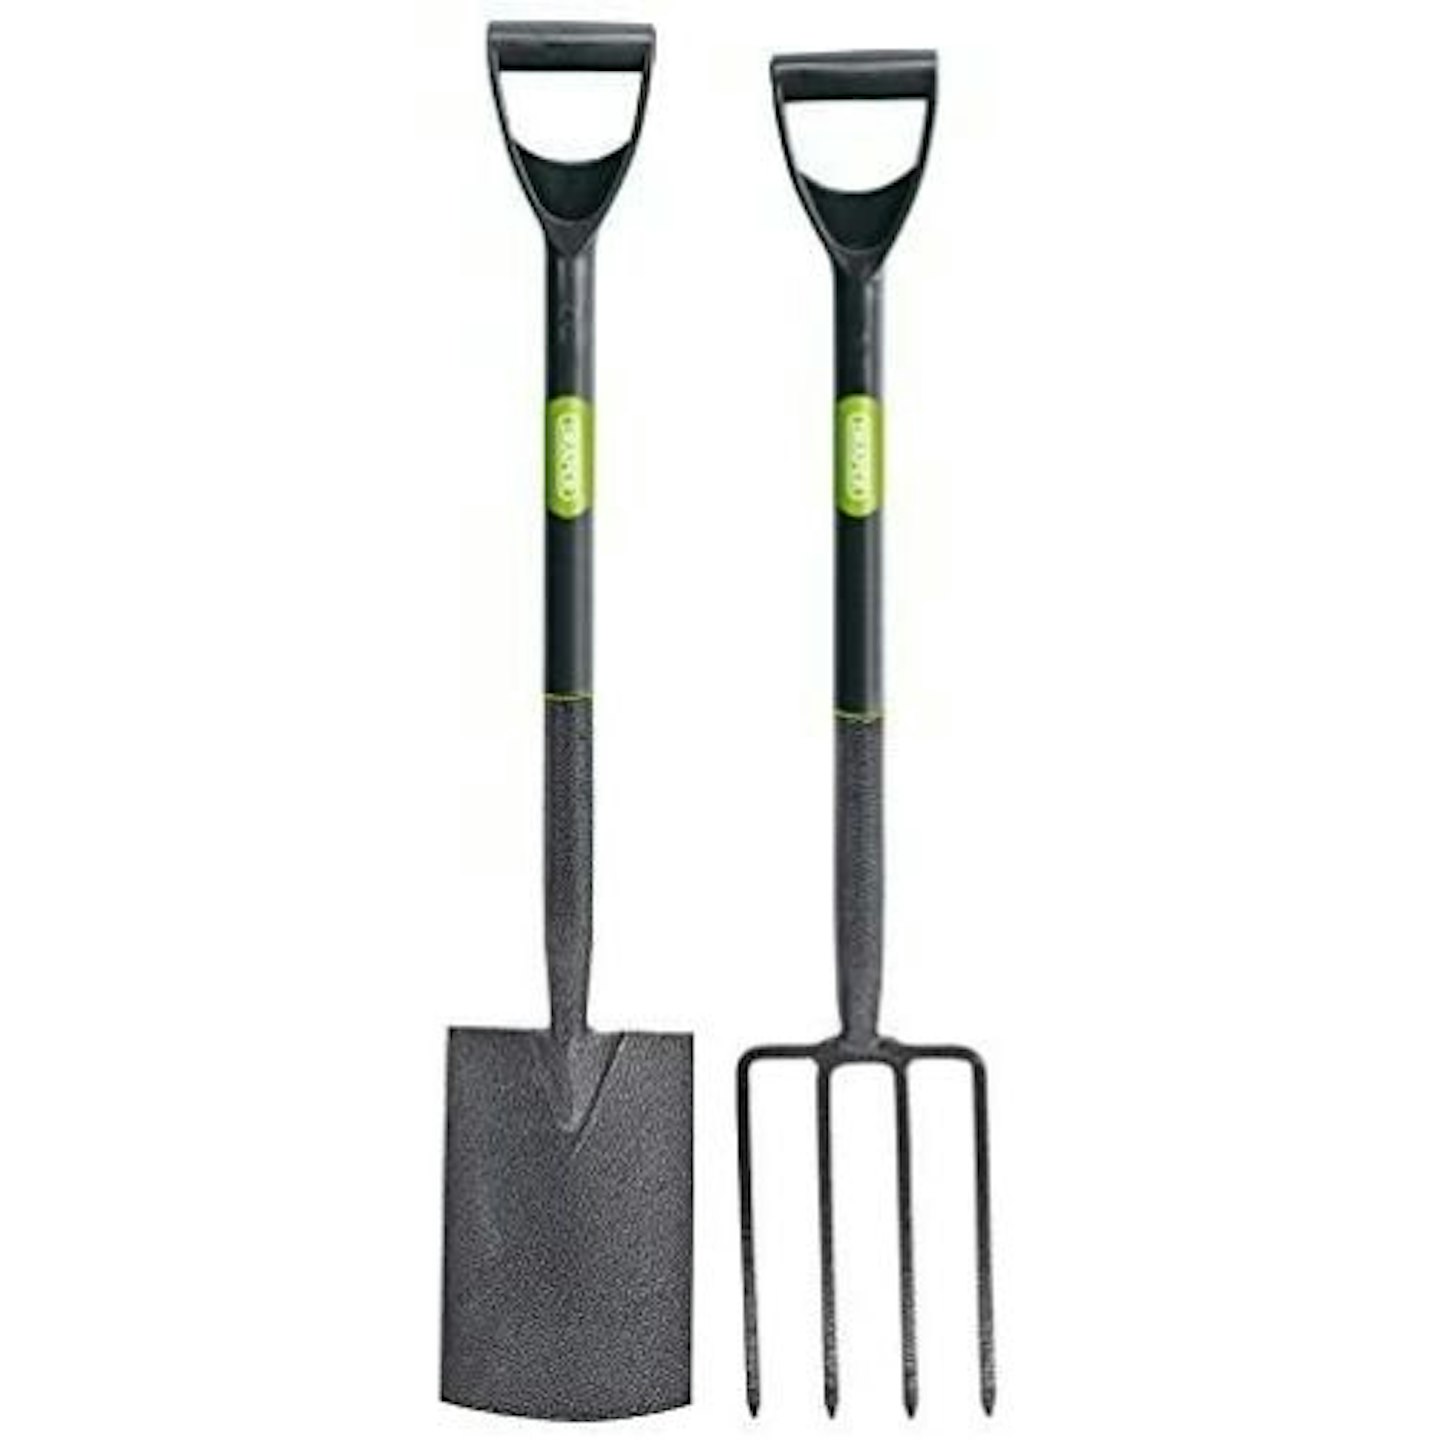 Draper Carbon Steel Garden Fork and Spade set